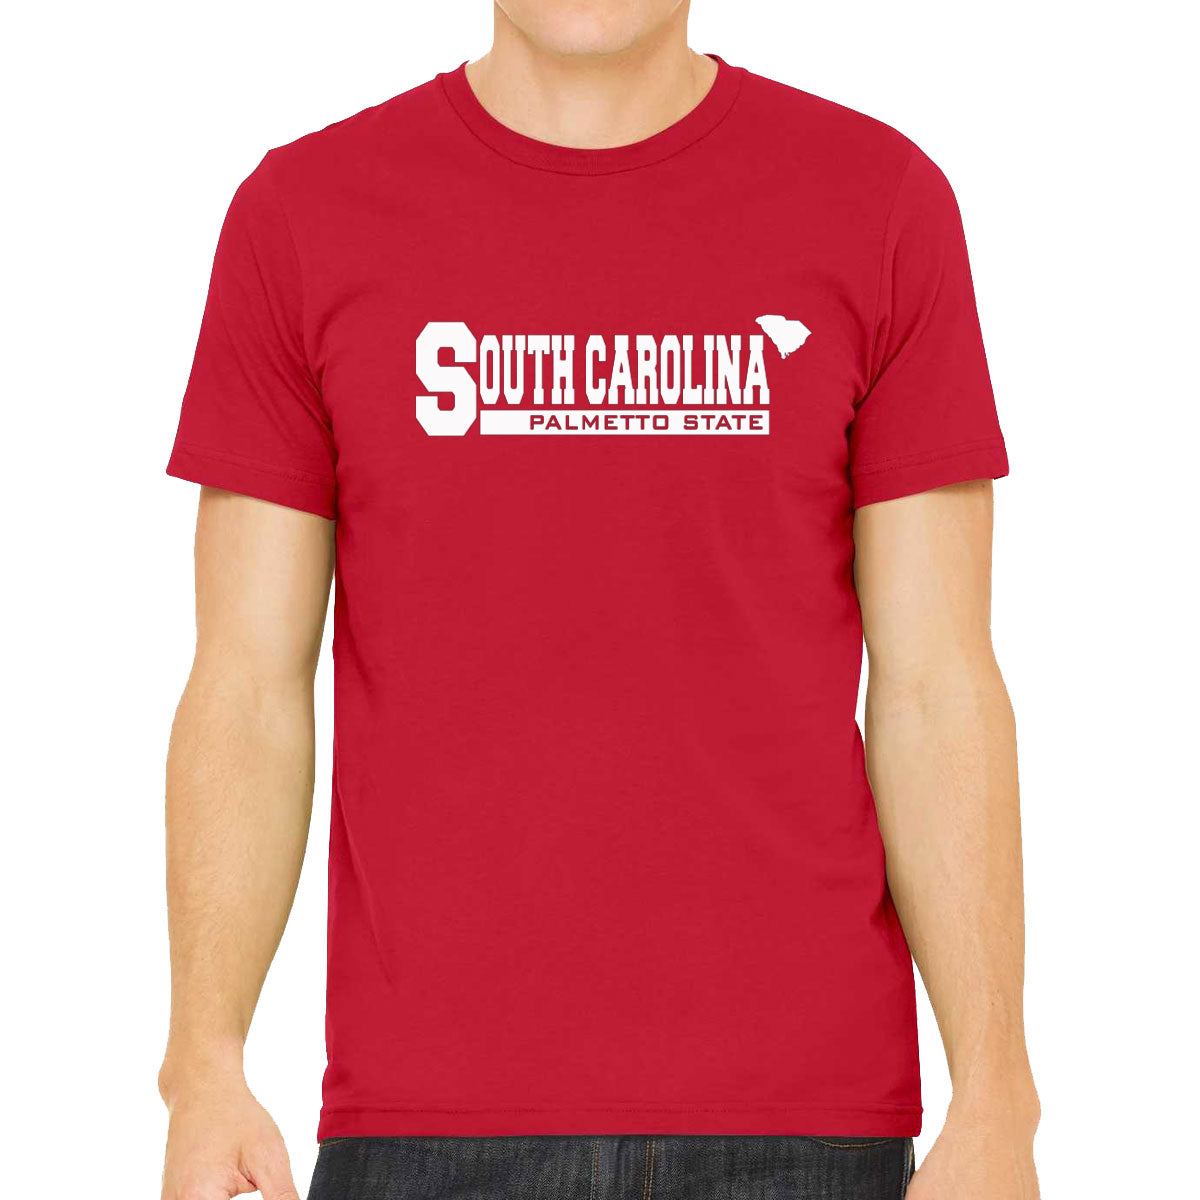 South Carolina Palmetto State Men's T-shirt